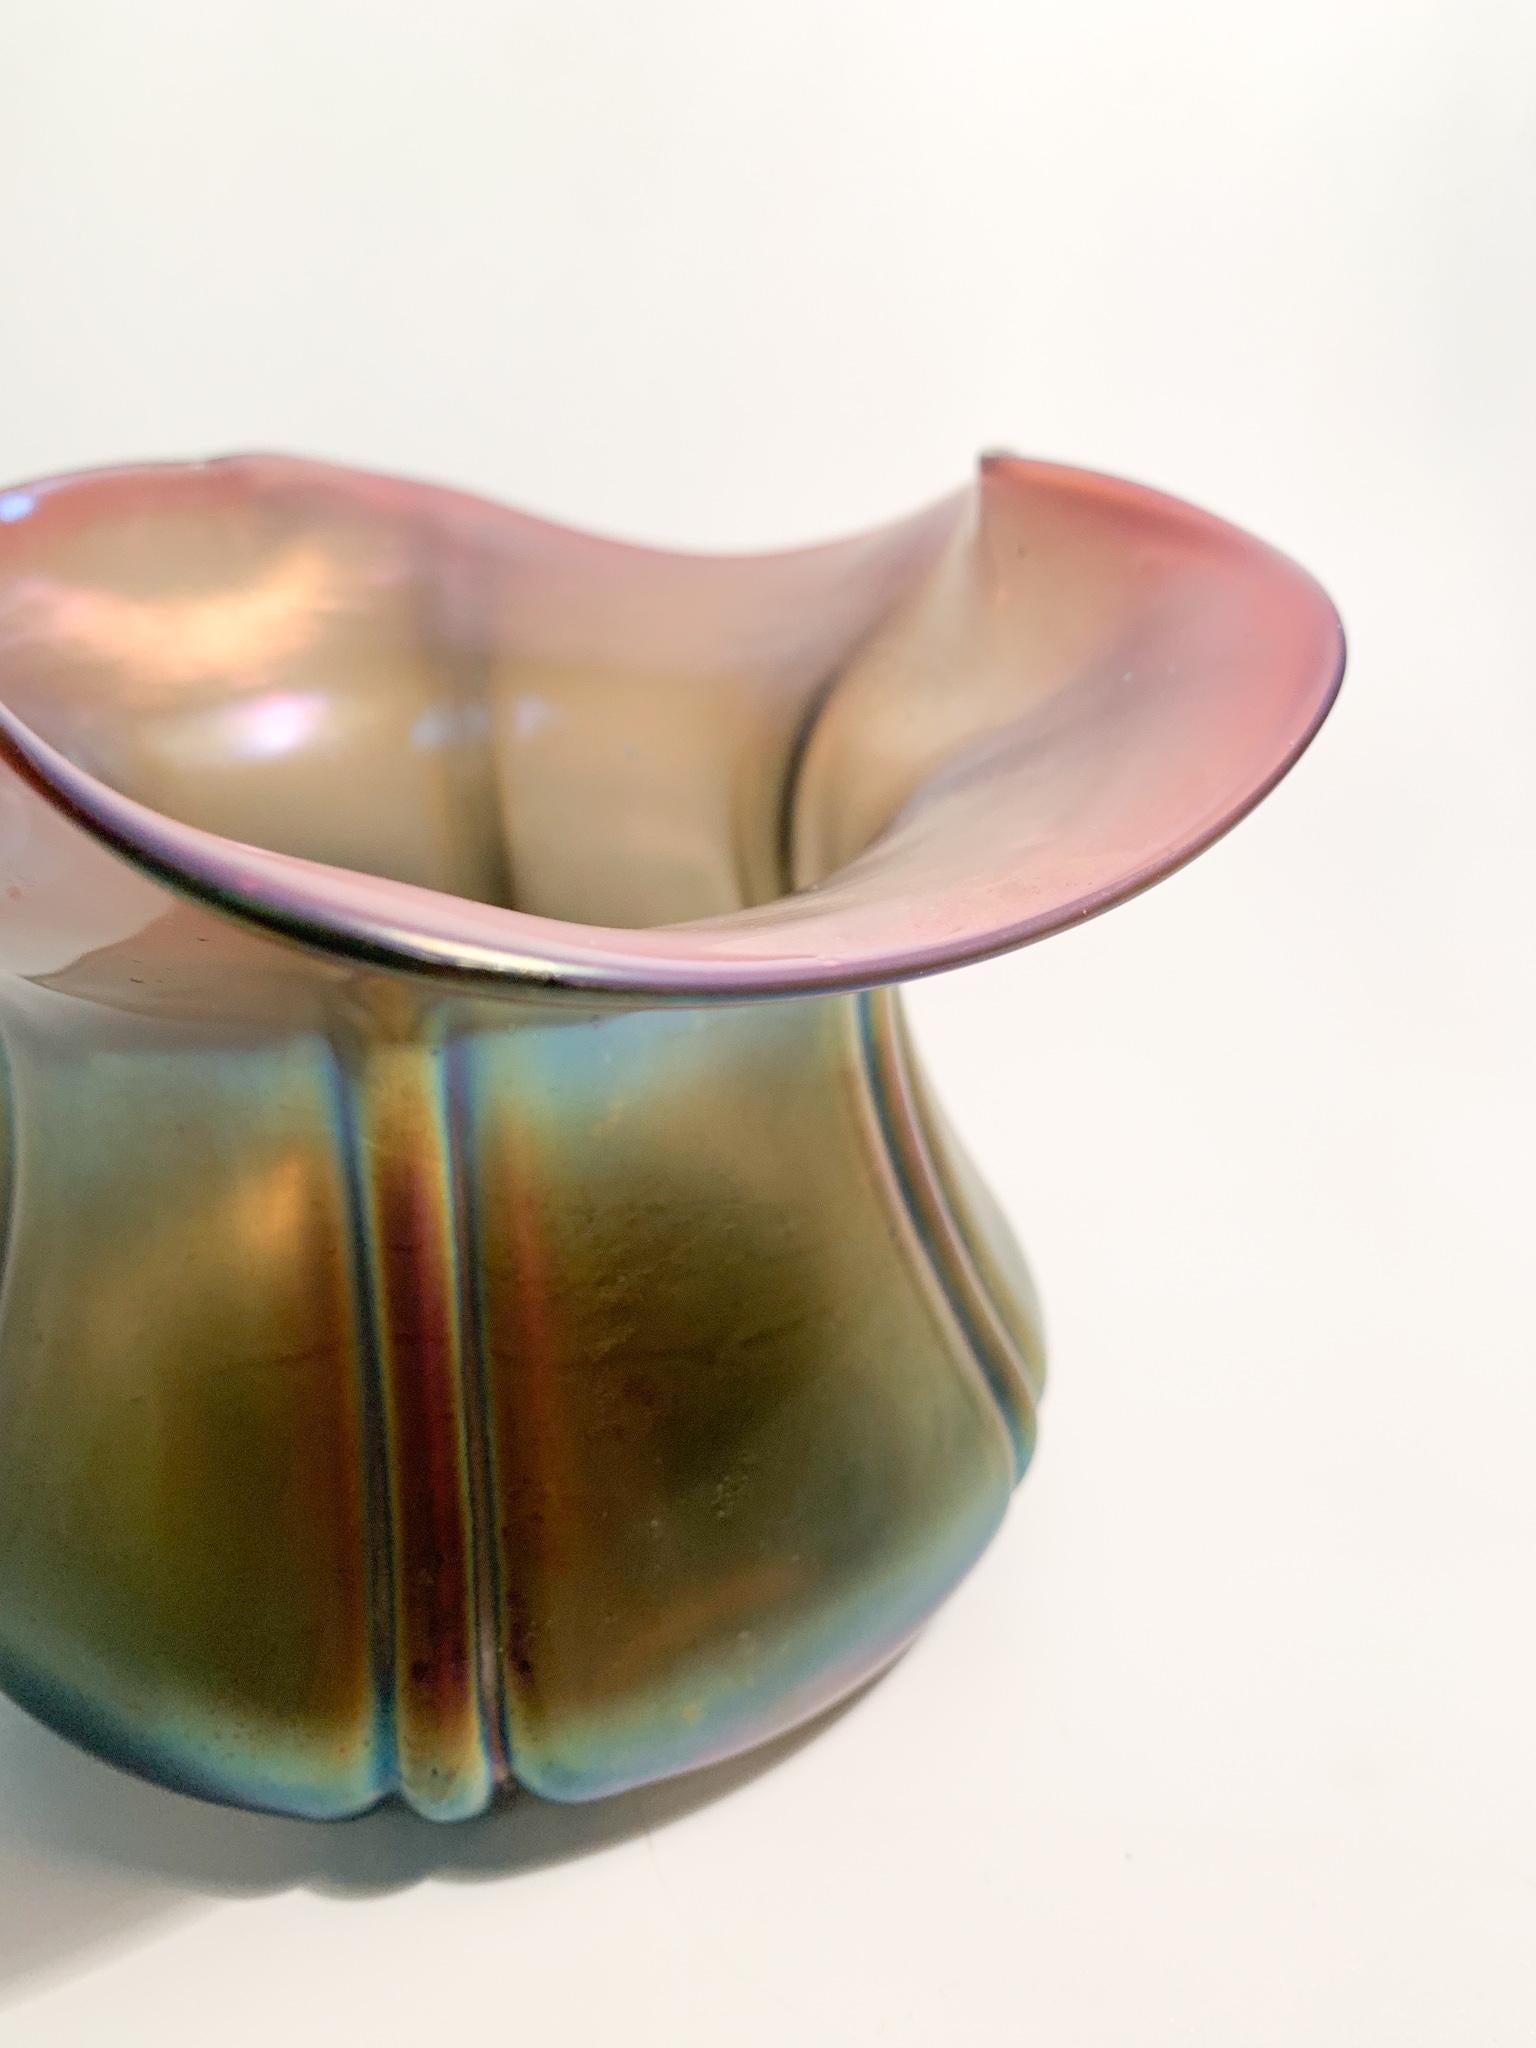 Austrian Iridescent Loetz Glass Vase with Flower Opening, 1940s For Sale